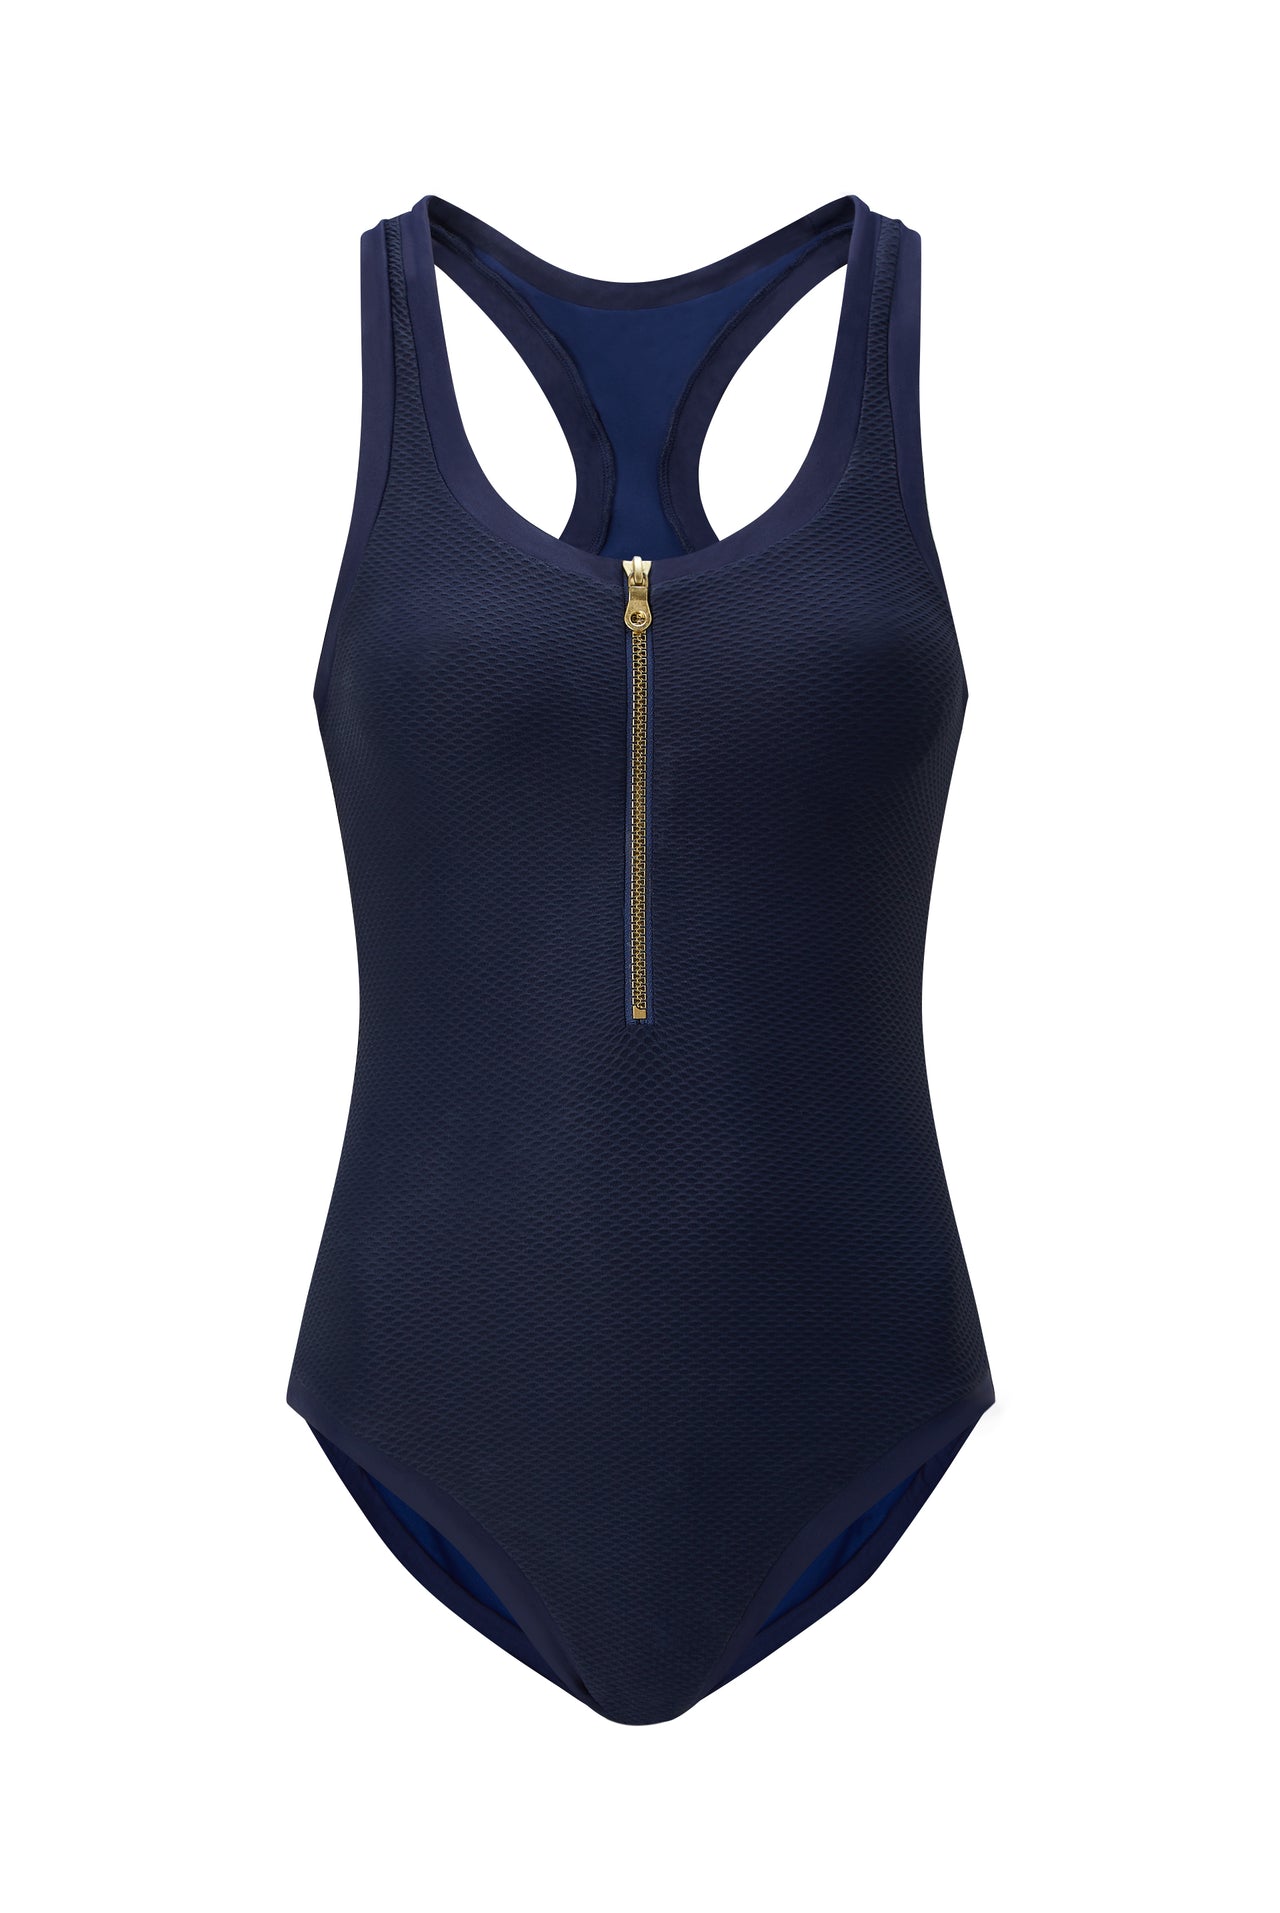 Heidi Klein Core Snake Bikini Set – Melmira Bra & Swimsuits